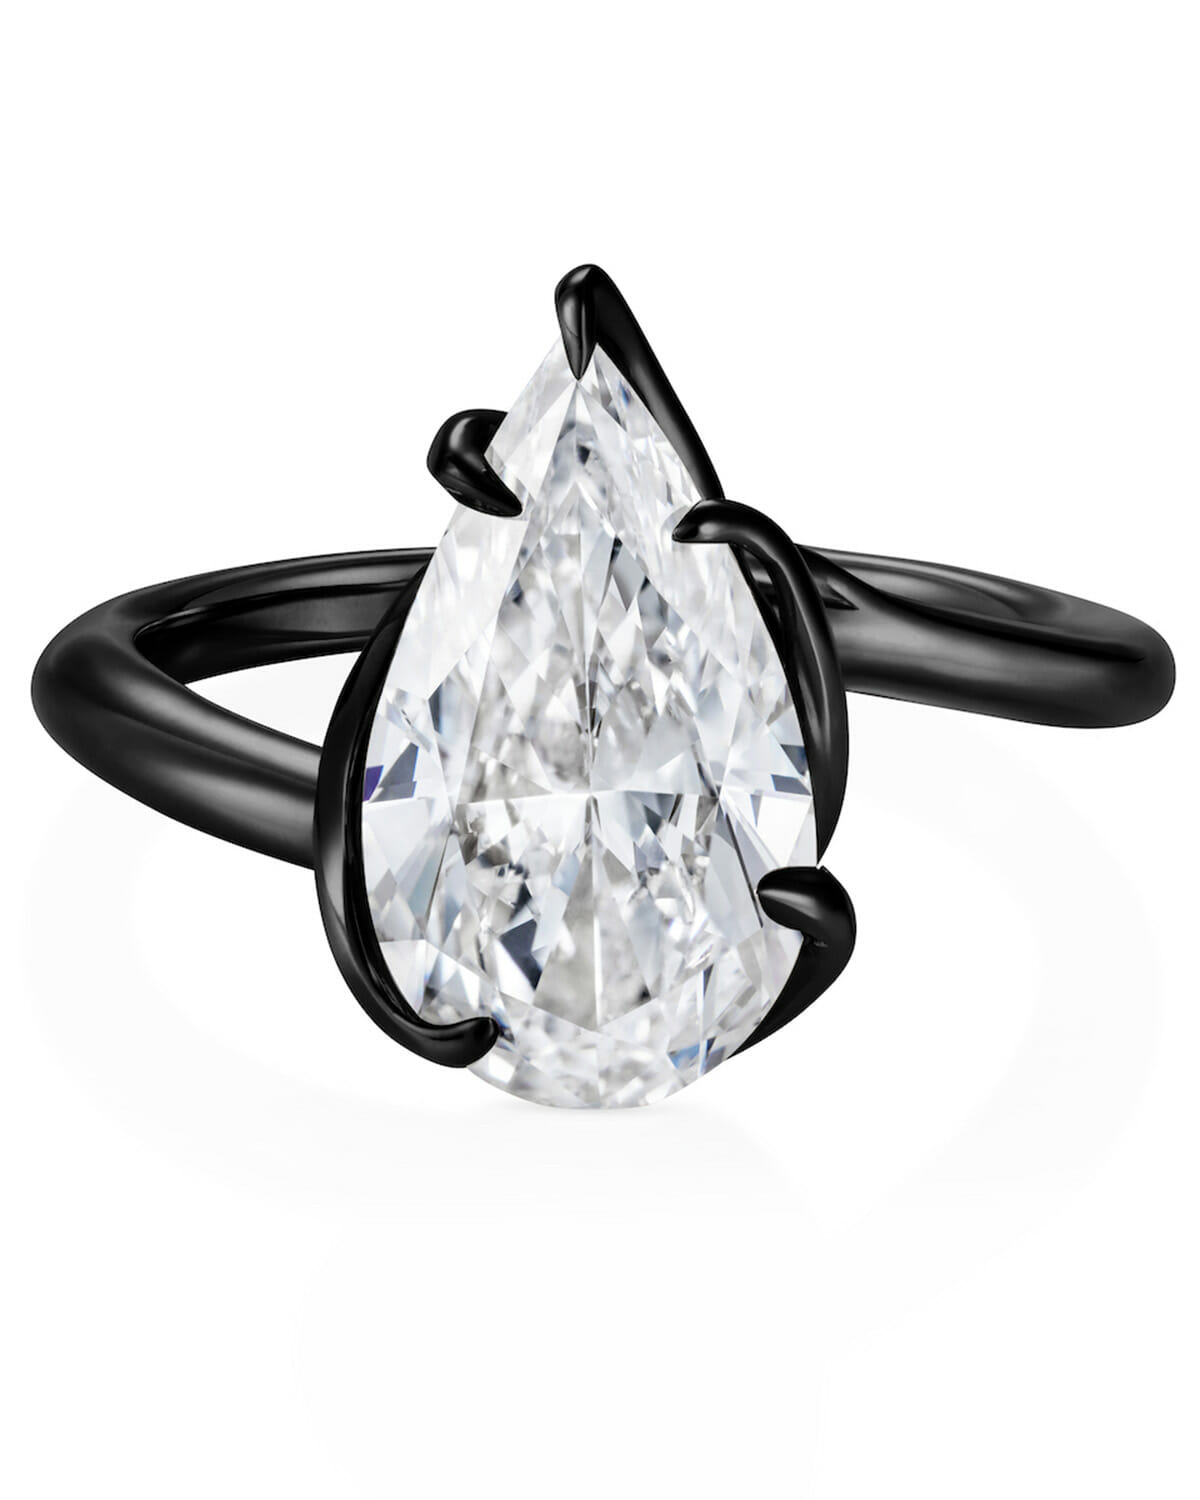 Thelma West Custom Black Ceramic Rebel Black Ring with Pear Shaped Diamond engagement ring